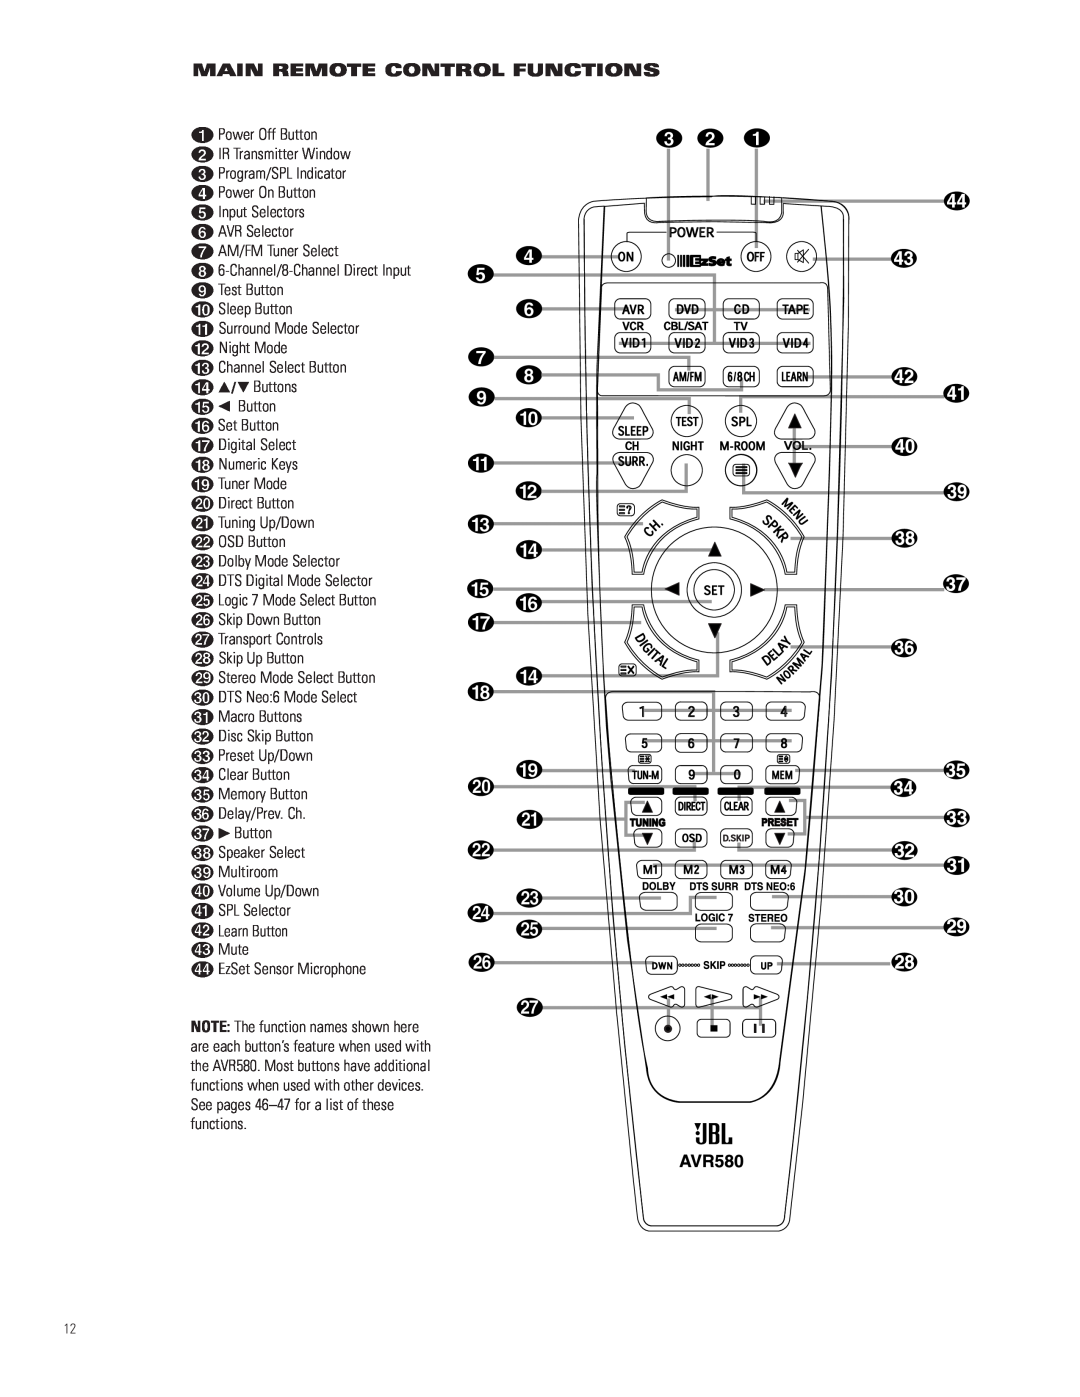 JBL AVR580 manual Main Remote Control Functions 